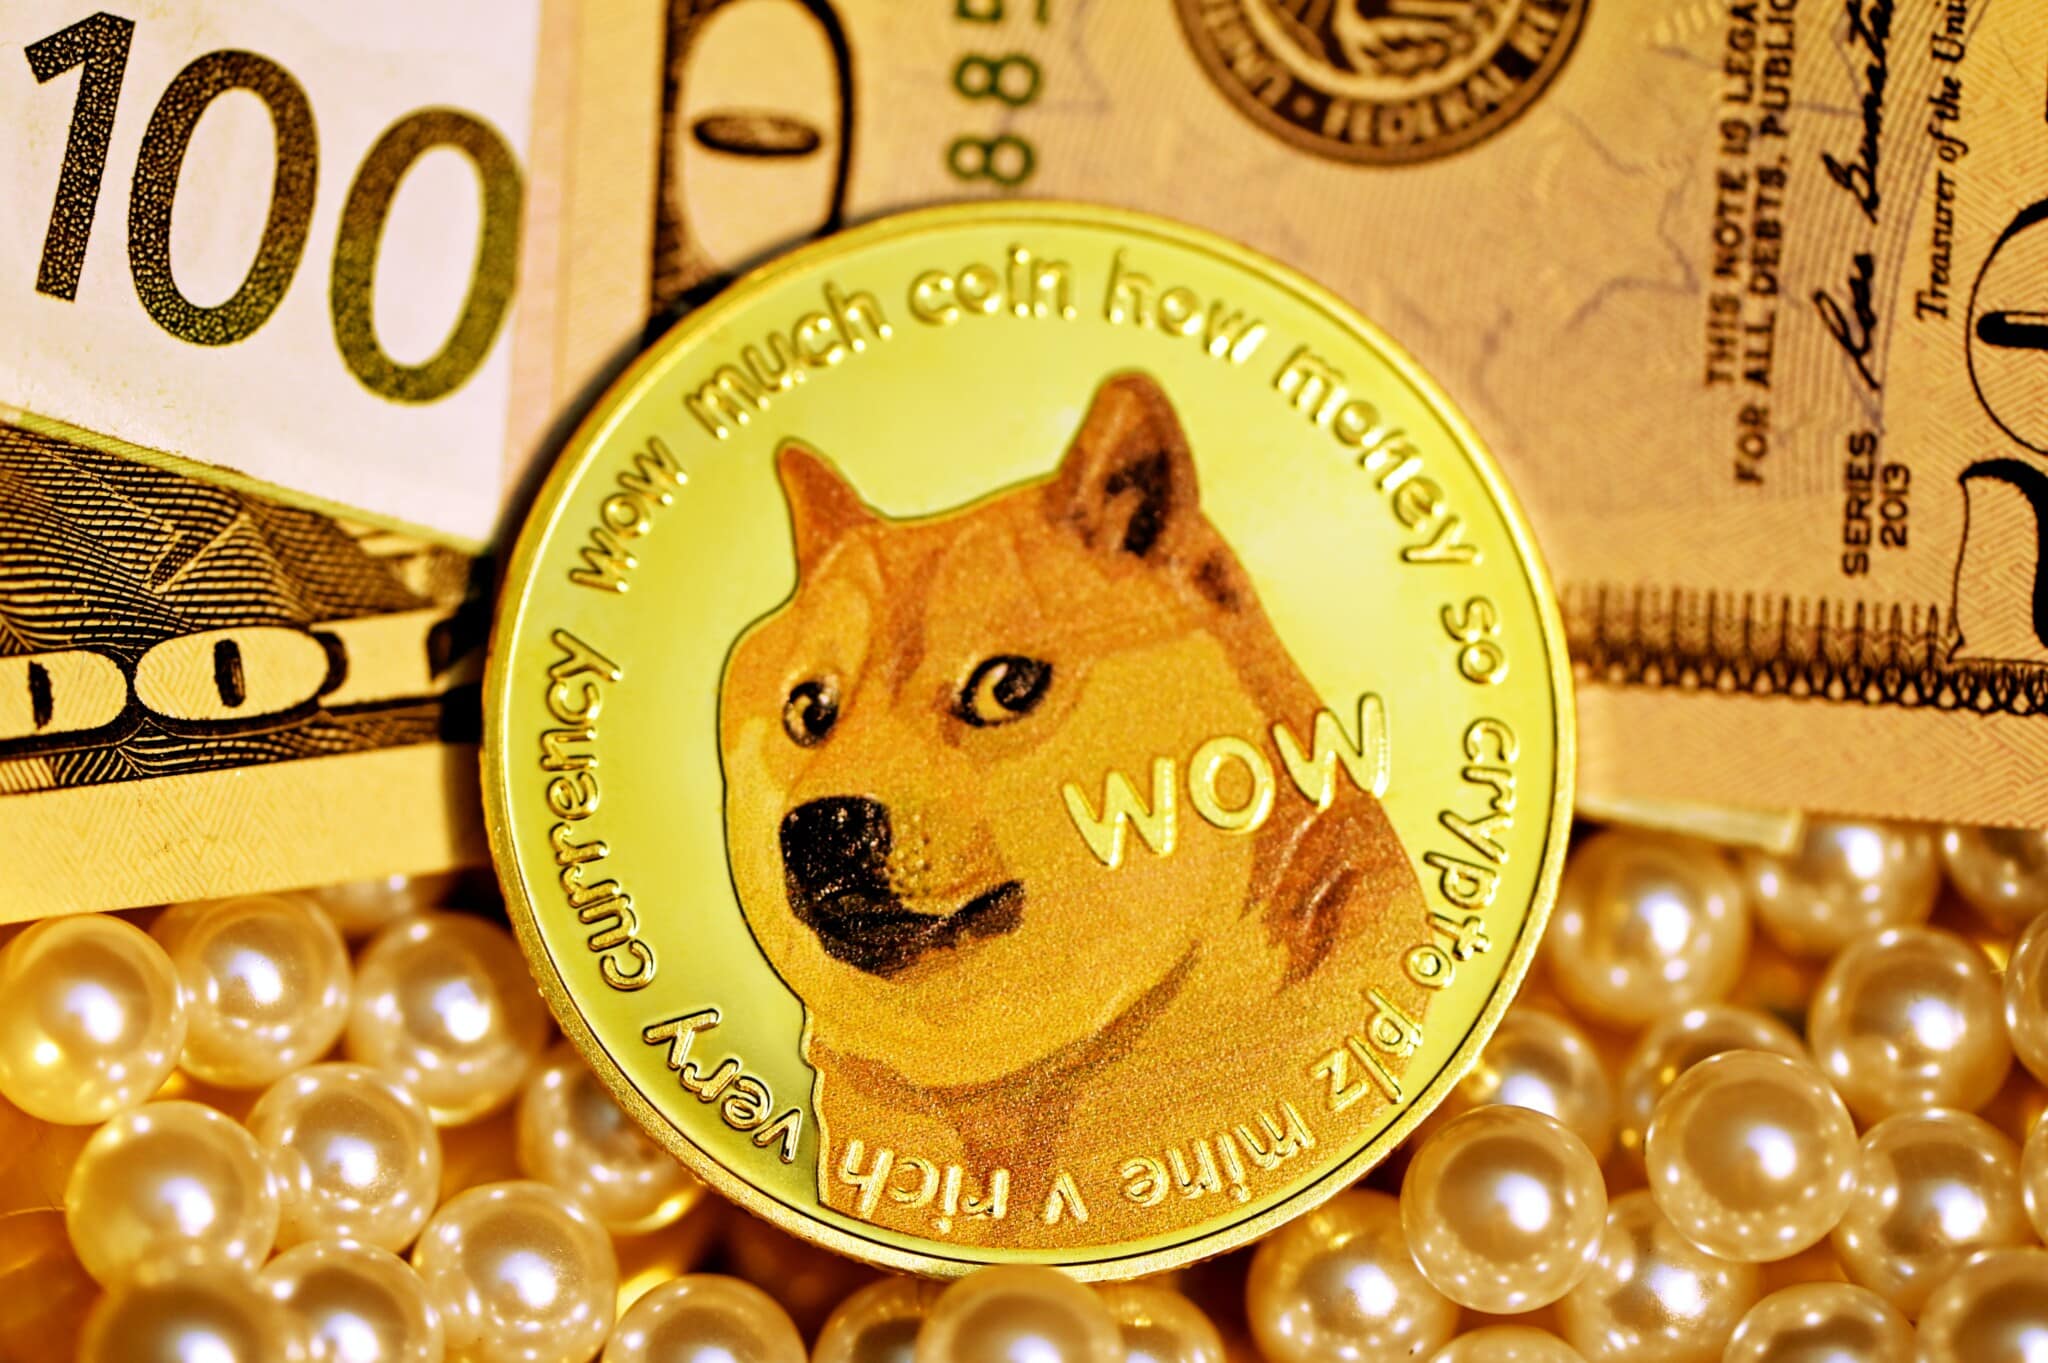 can i buy dogecoin on crypto app